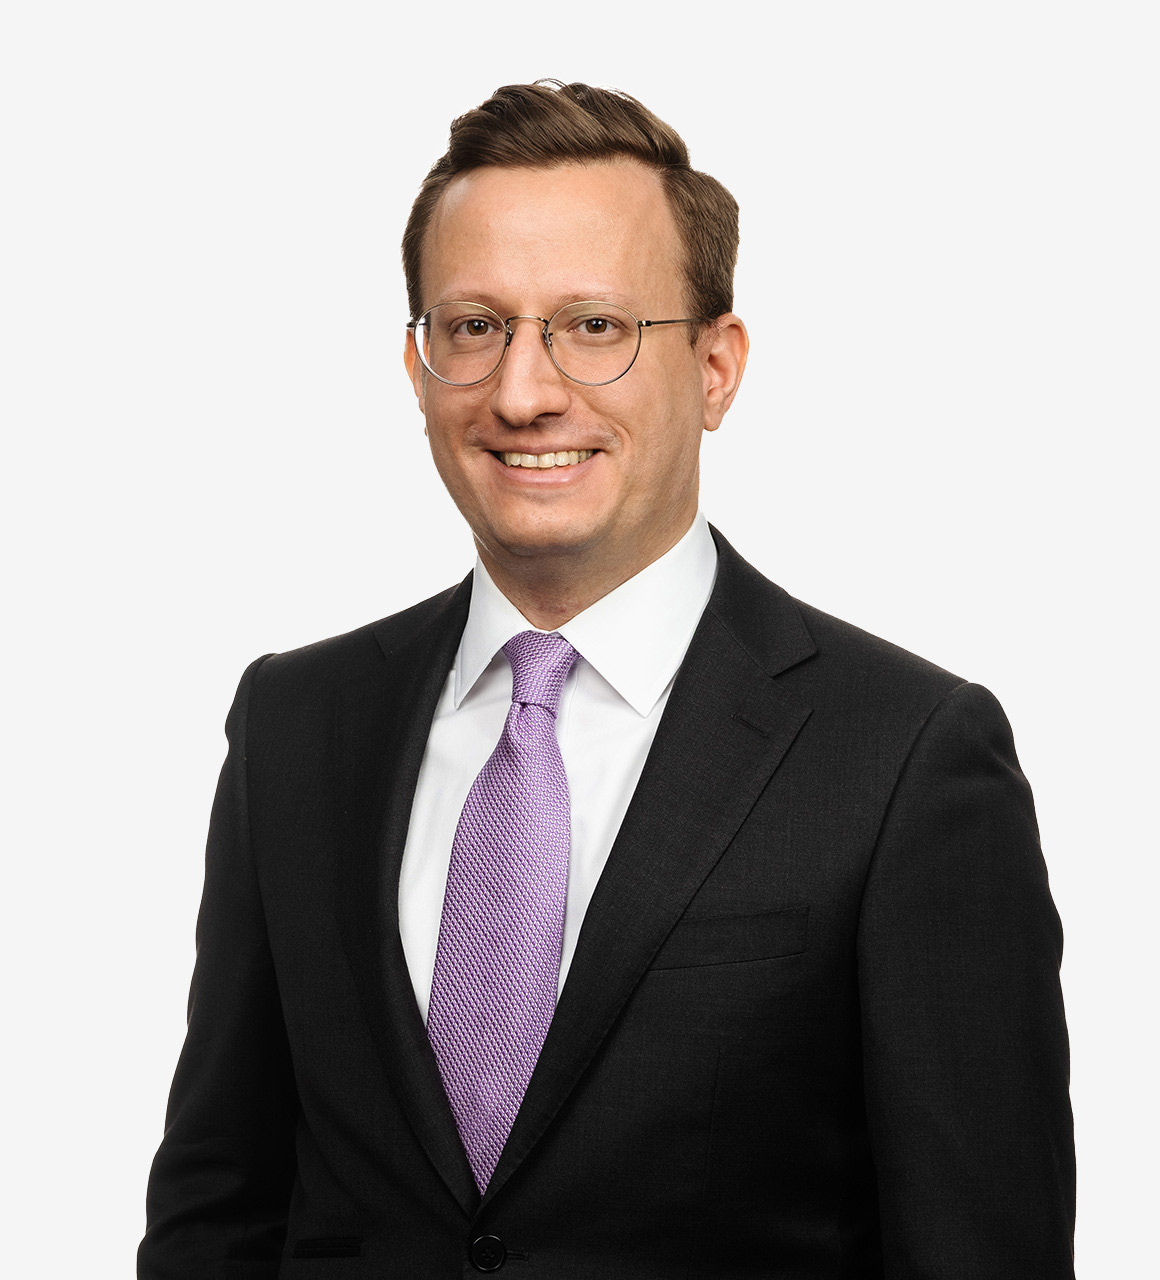 Mitchell Z. Markowitz, Associate, ArentFox Schiff